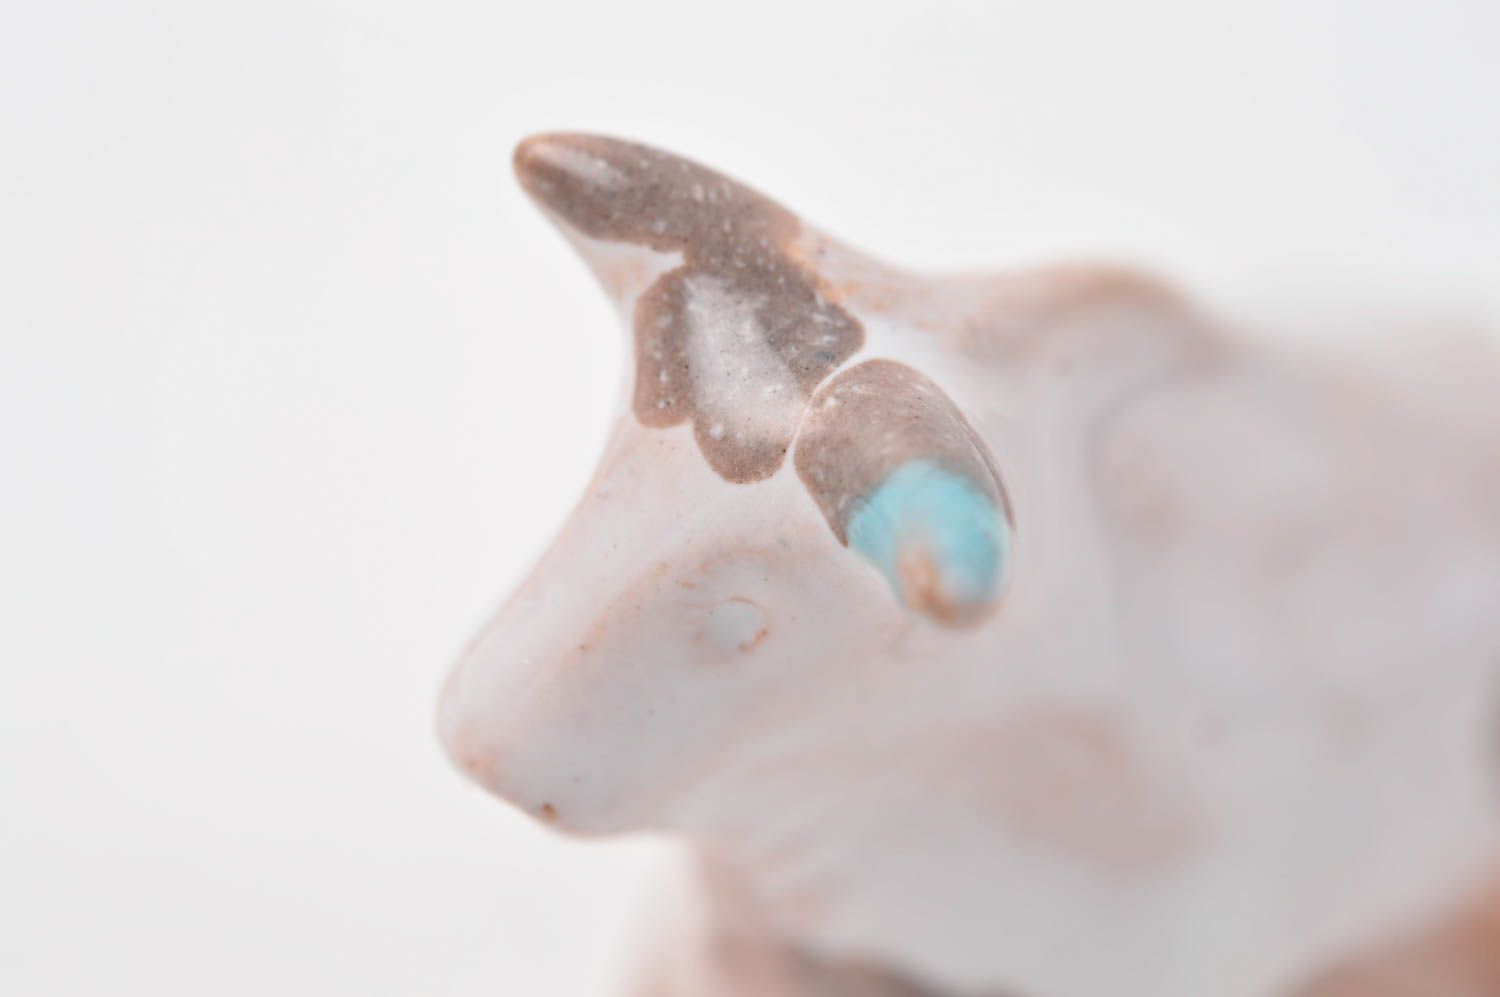 Ochse handmade Keramik Deko Figur aus Ton Tier Statue Miniatur Figur schön grell foto 10